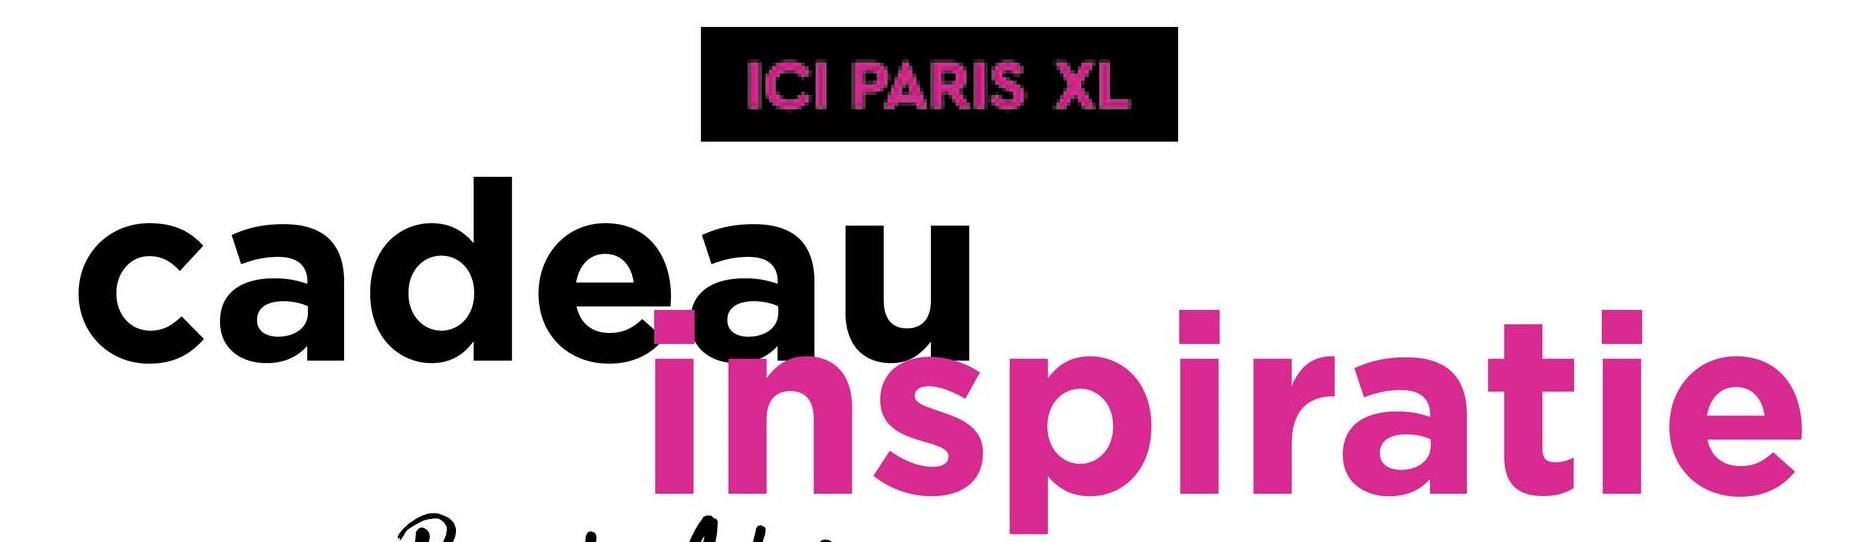 ICI PARIS XL
cadeau
inspiratie